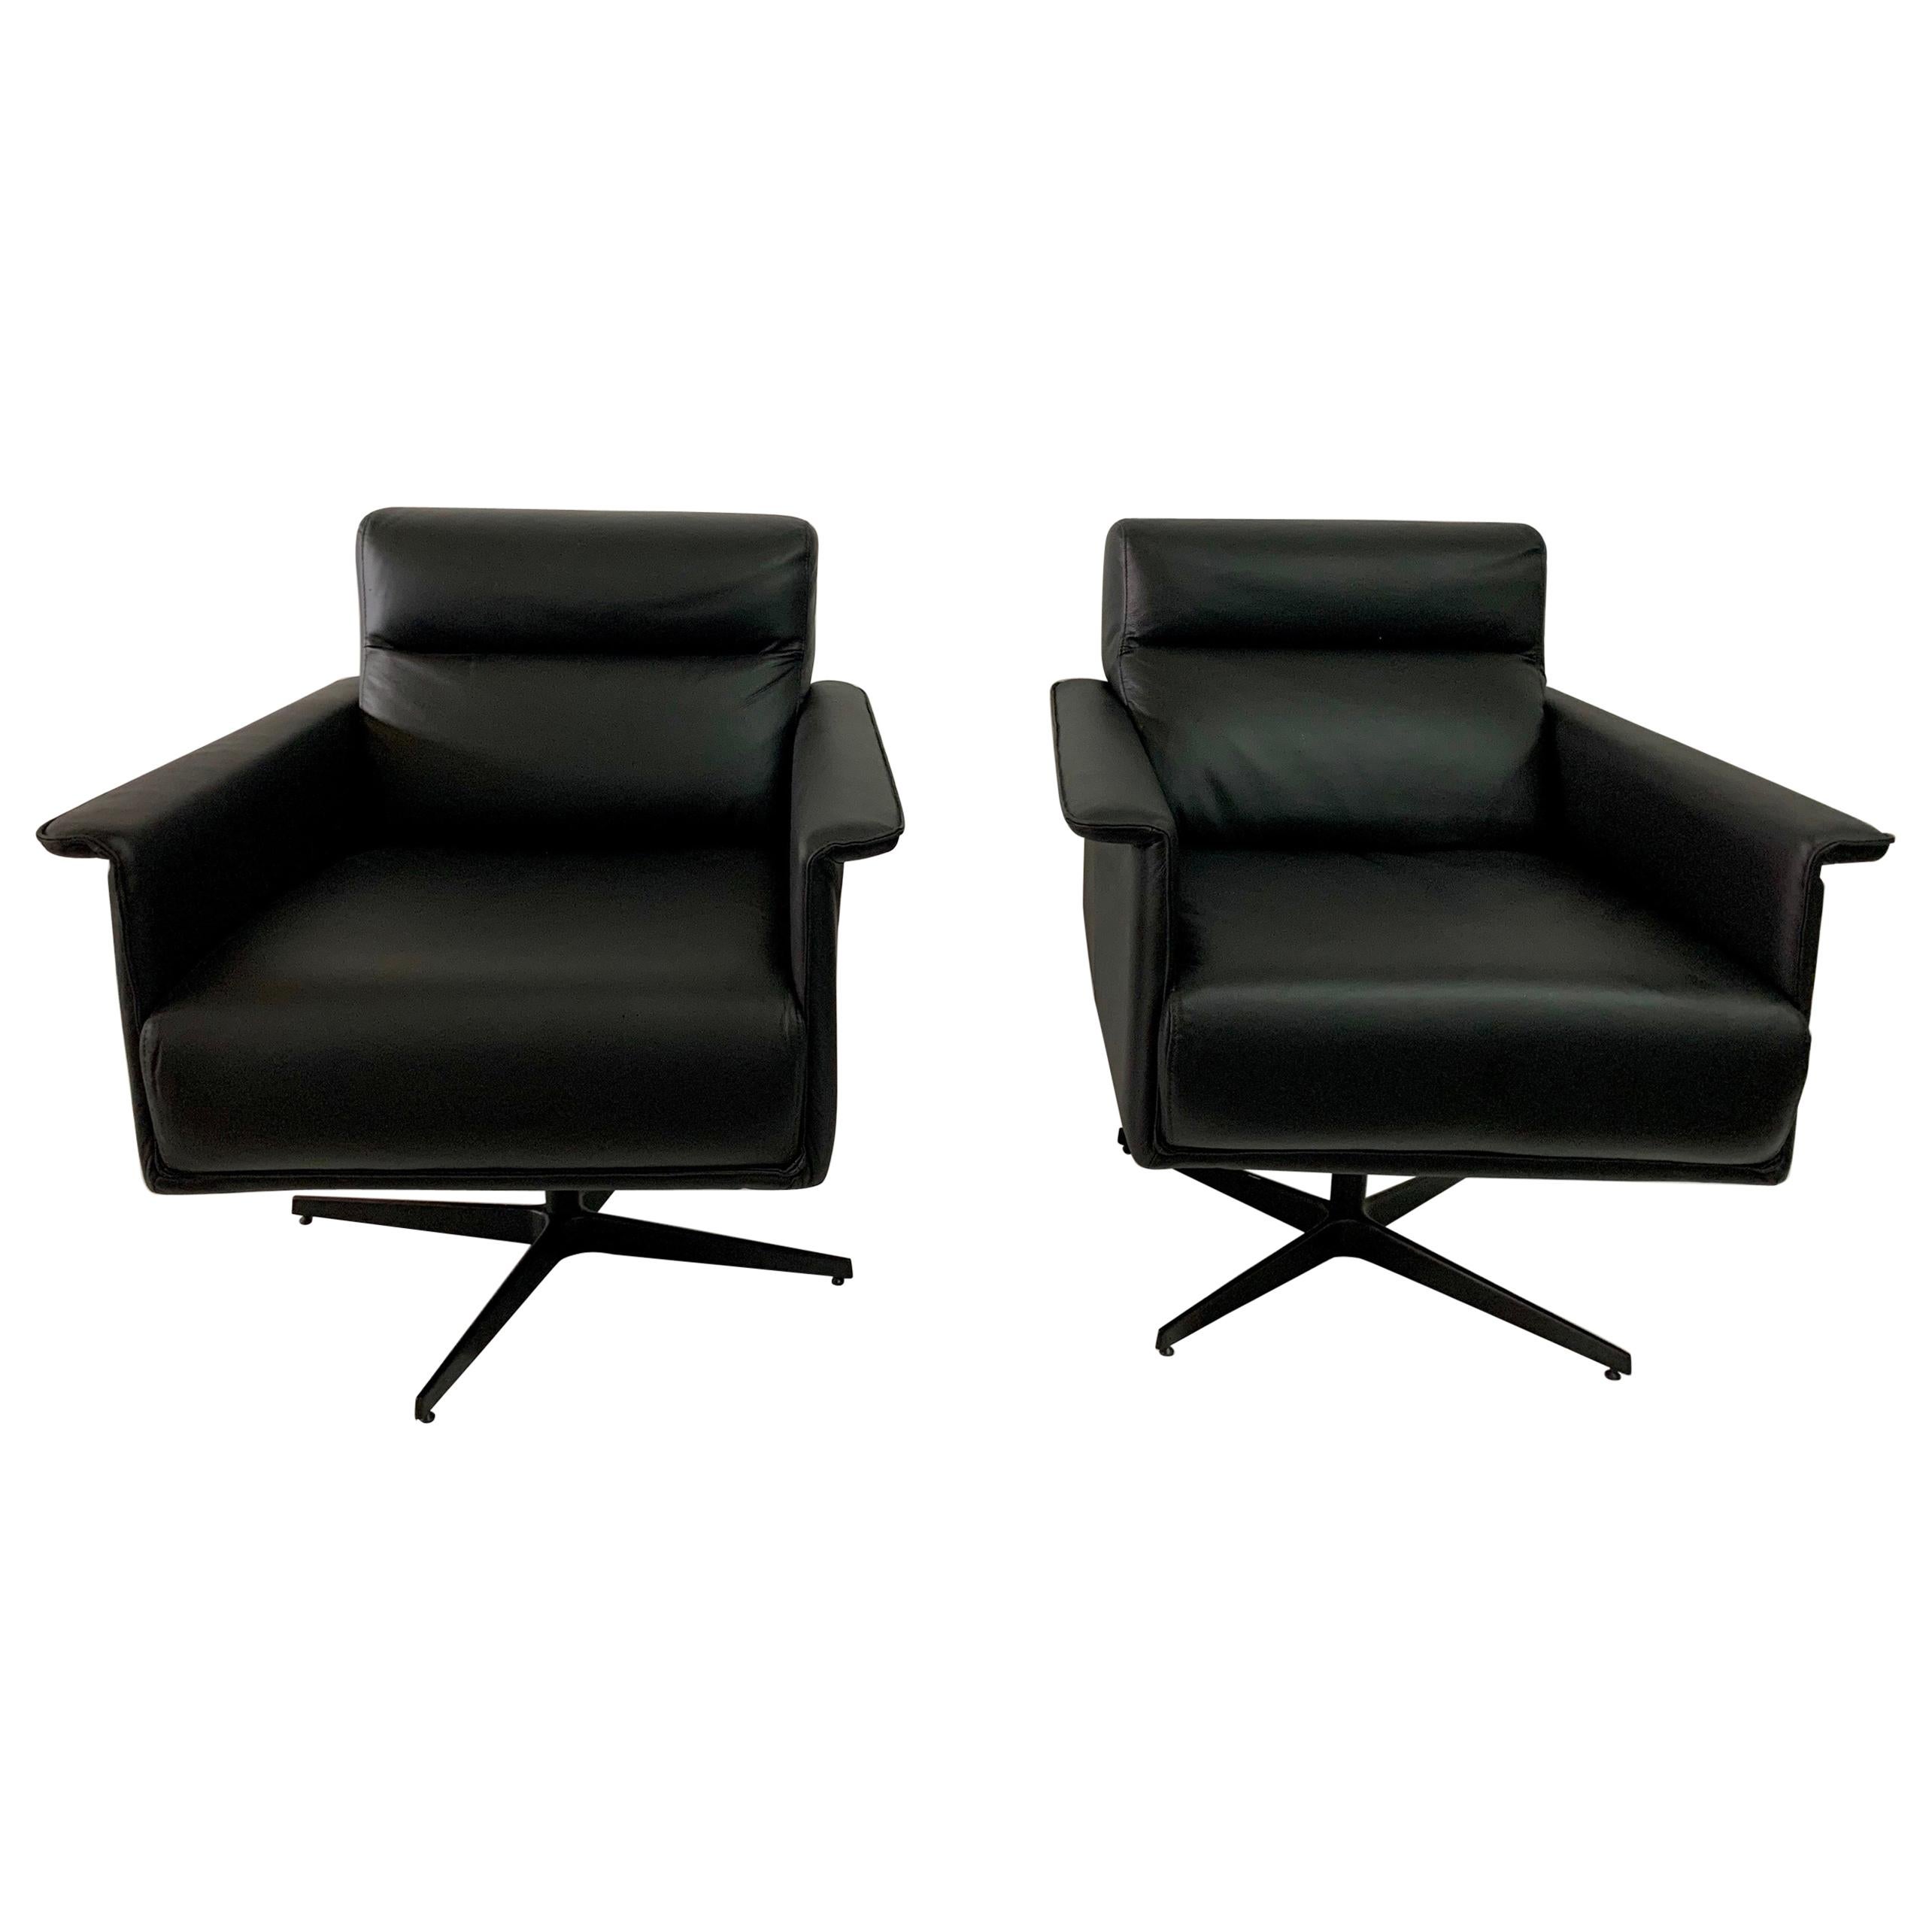 Italian Leather Swivel Chairs, Pair